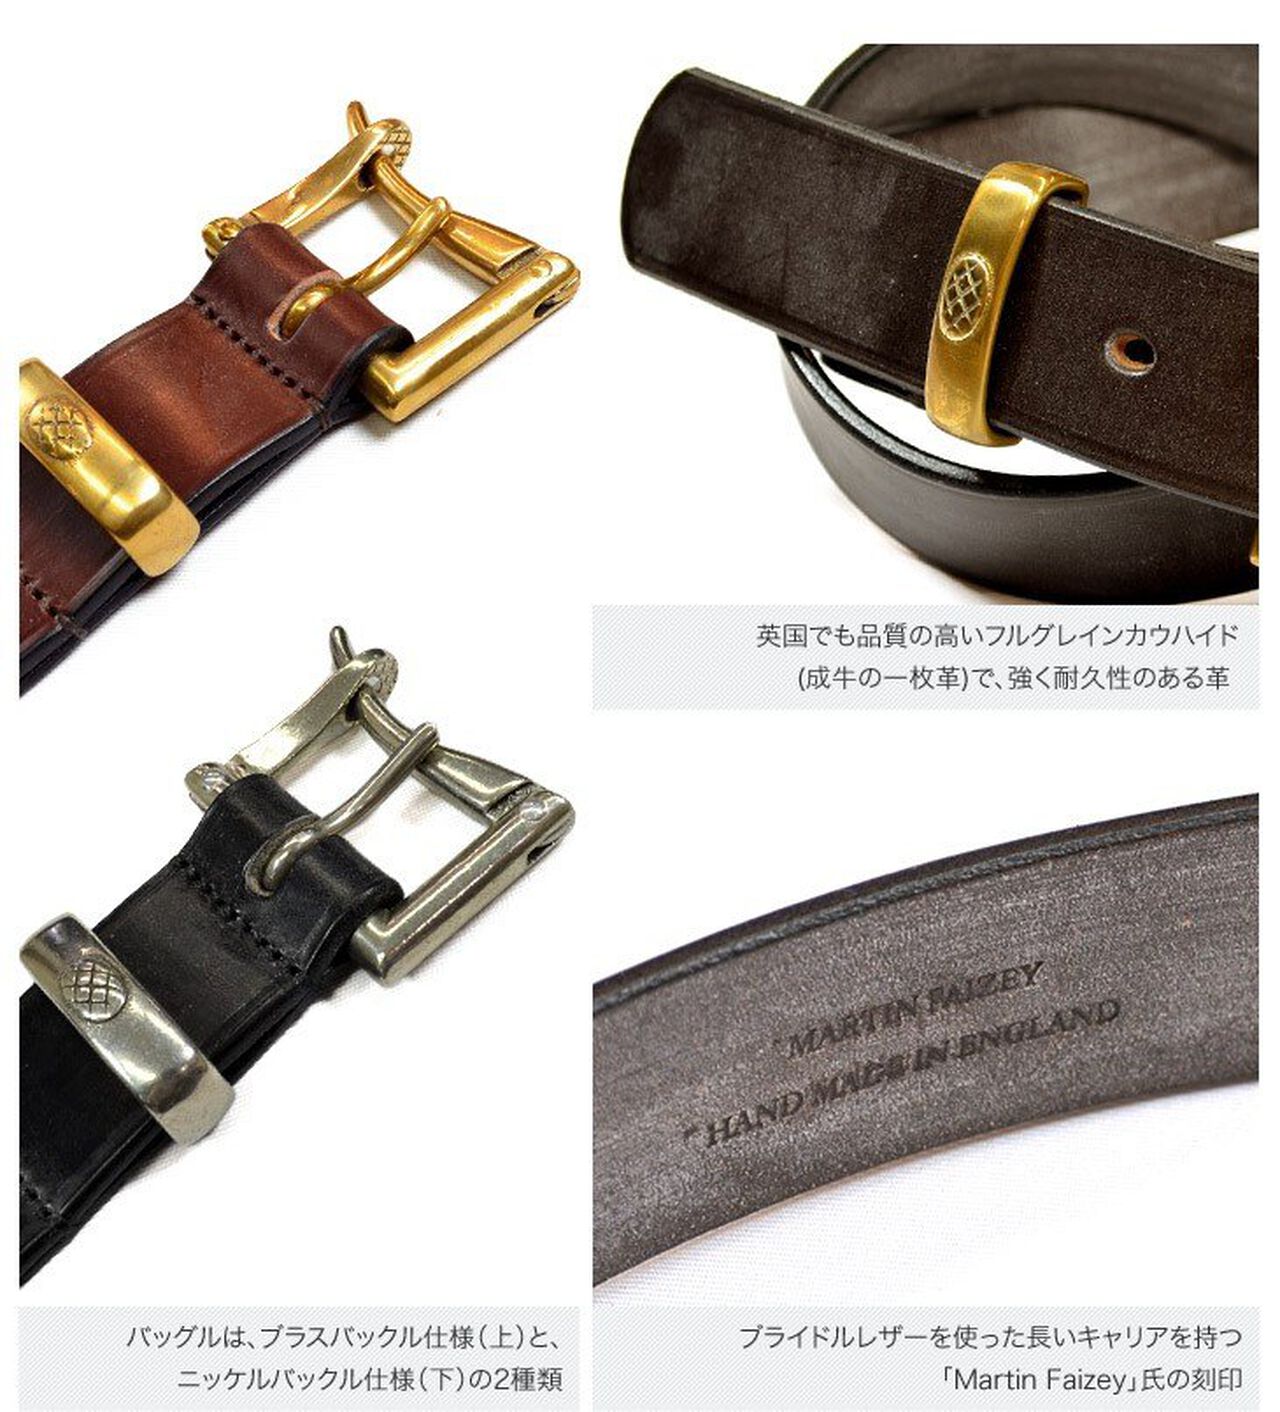 1.5 / 38mm wide leather Belt – EUH LEATHER COMPANY LTD.